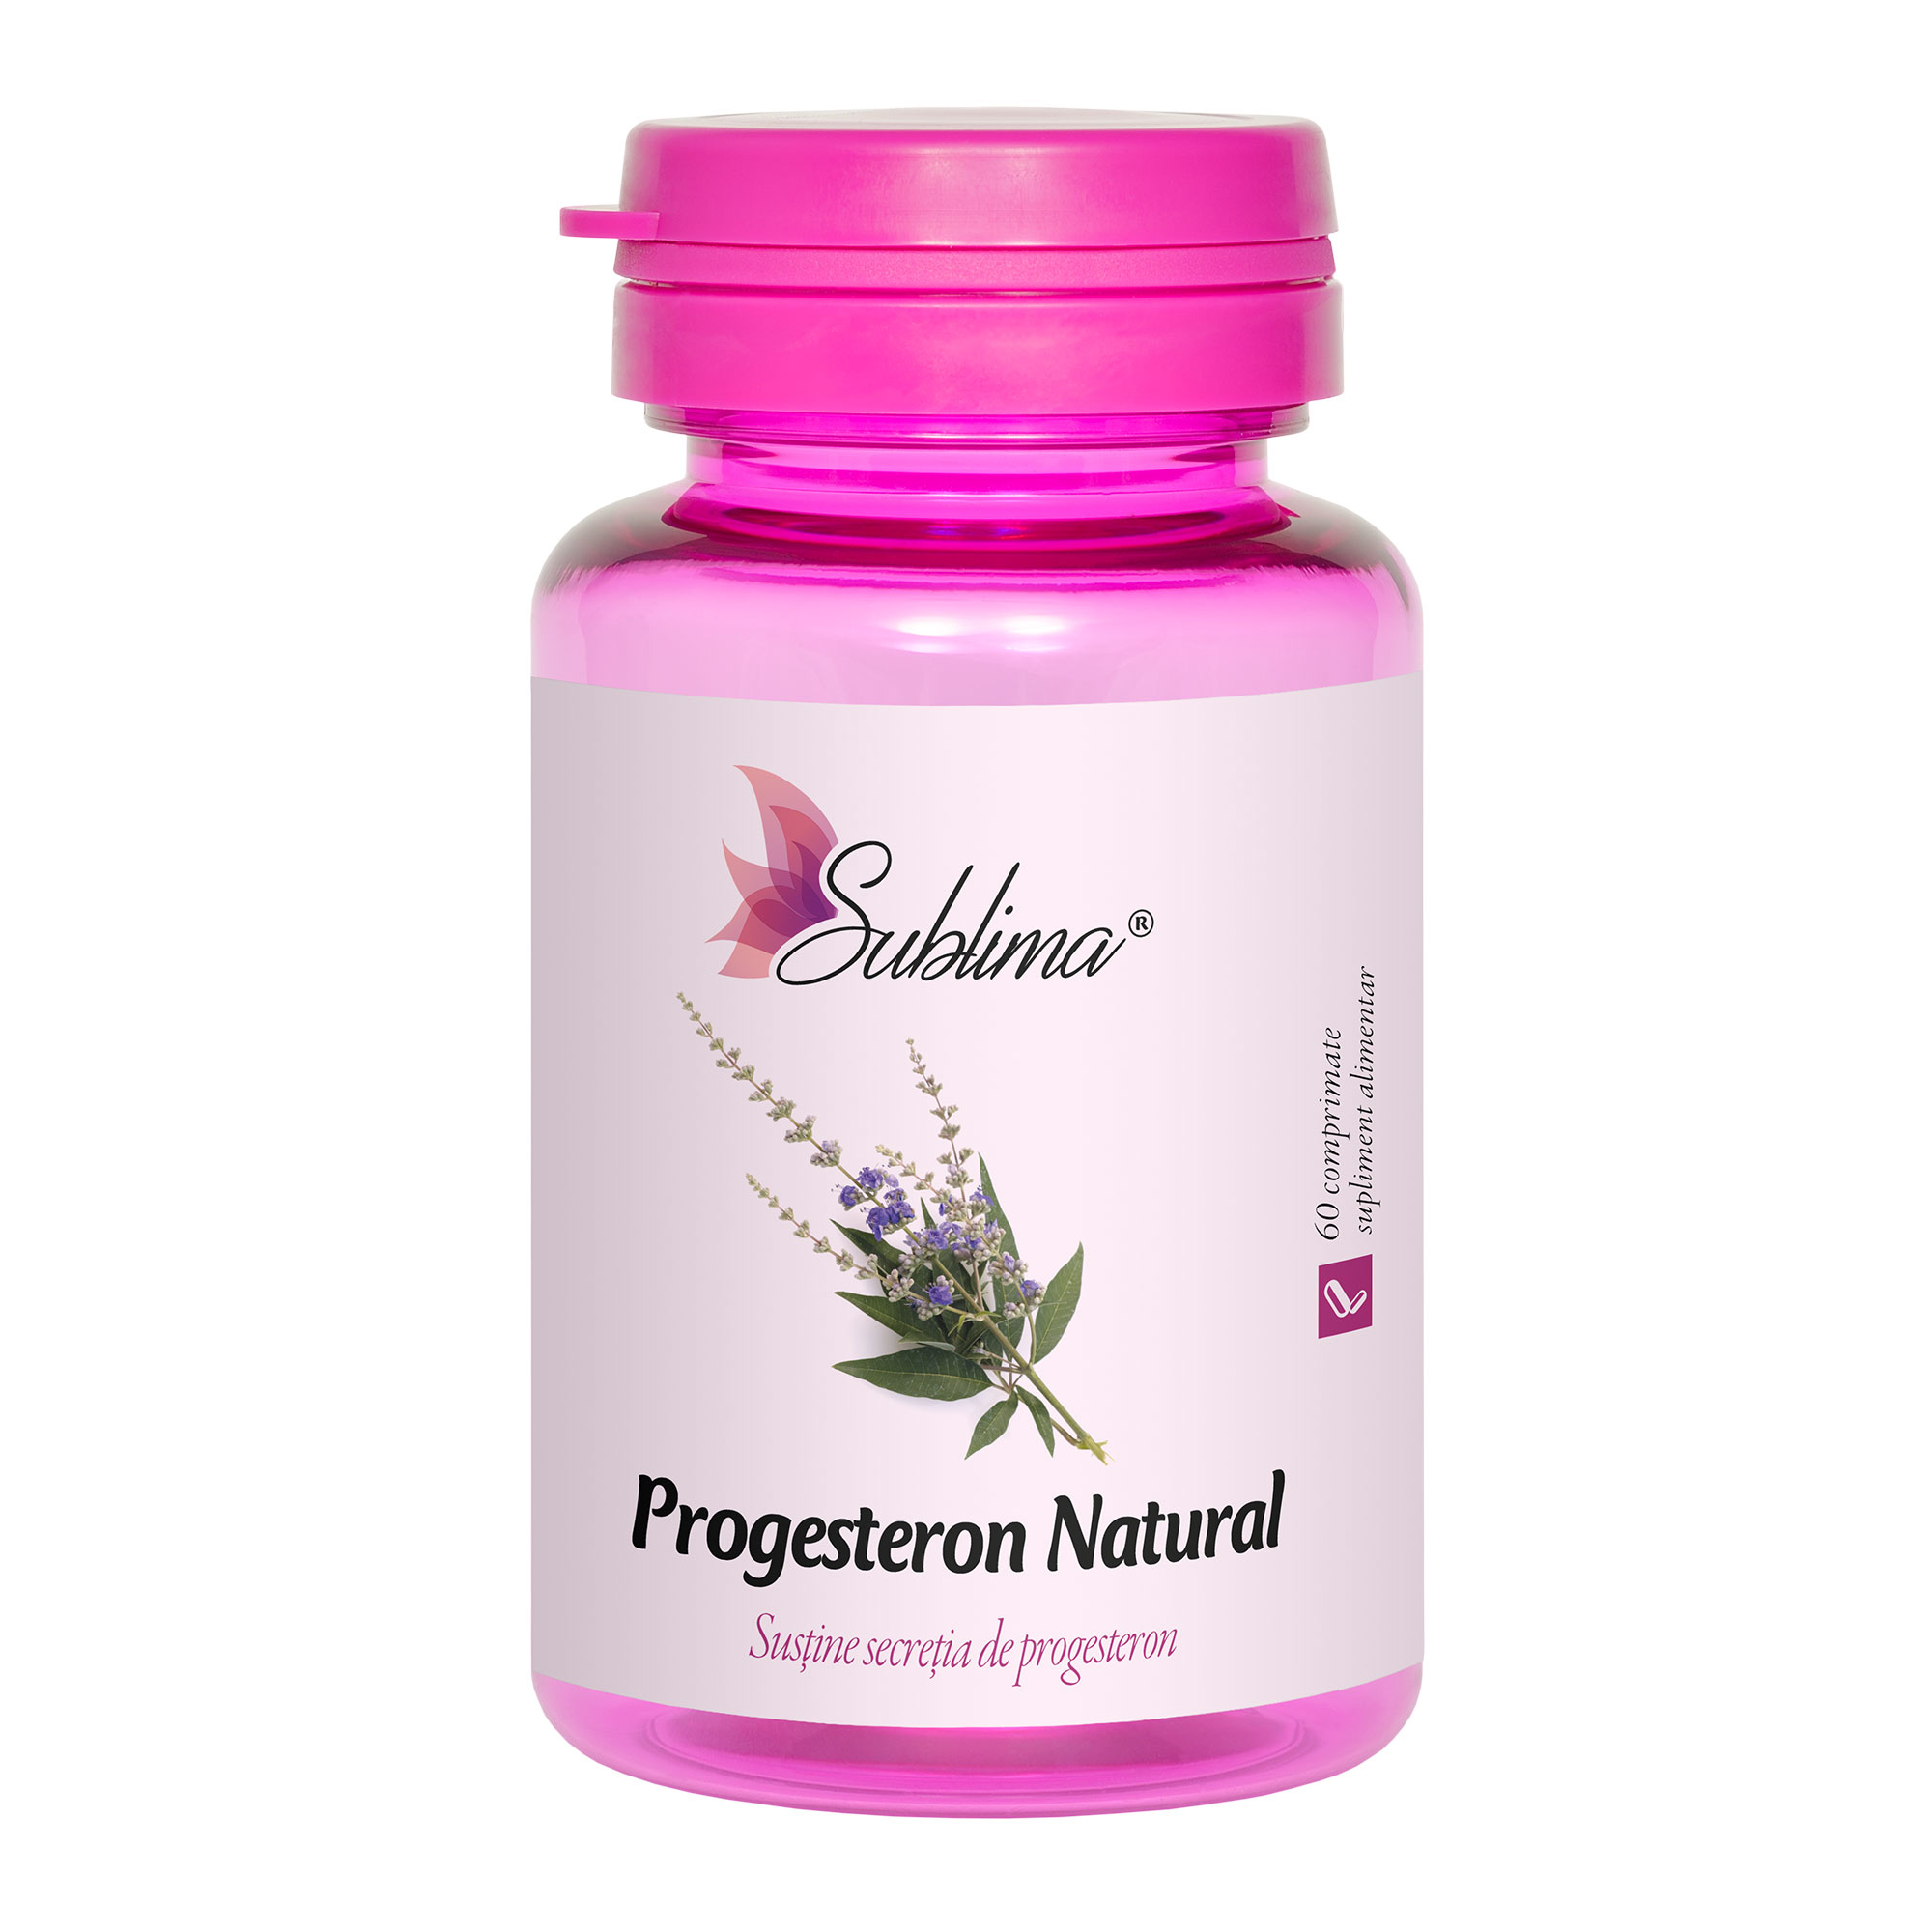 Sublima Progesteron Natural comprimate daciaplant.ro